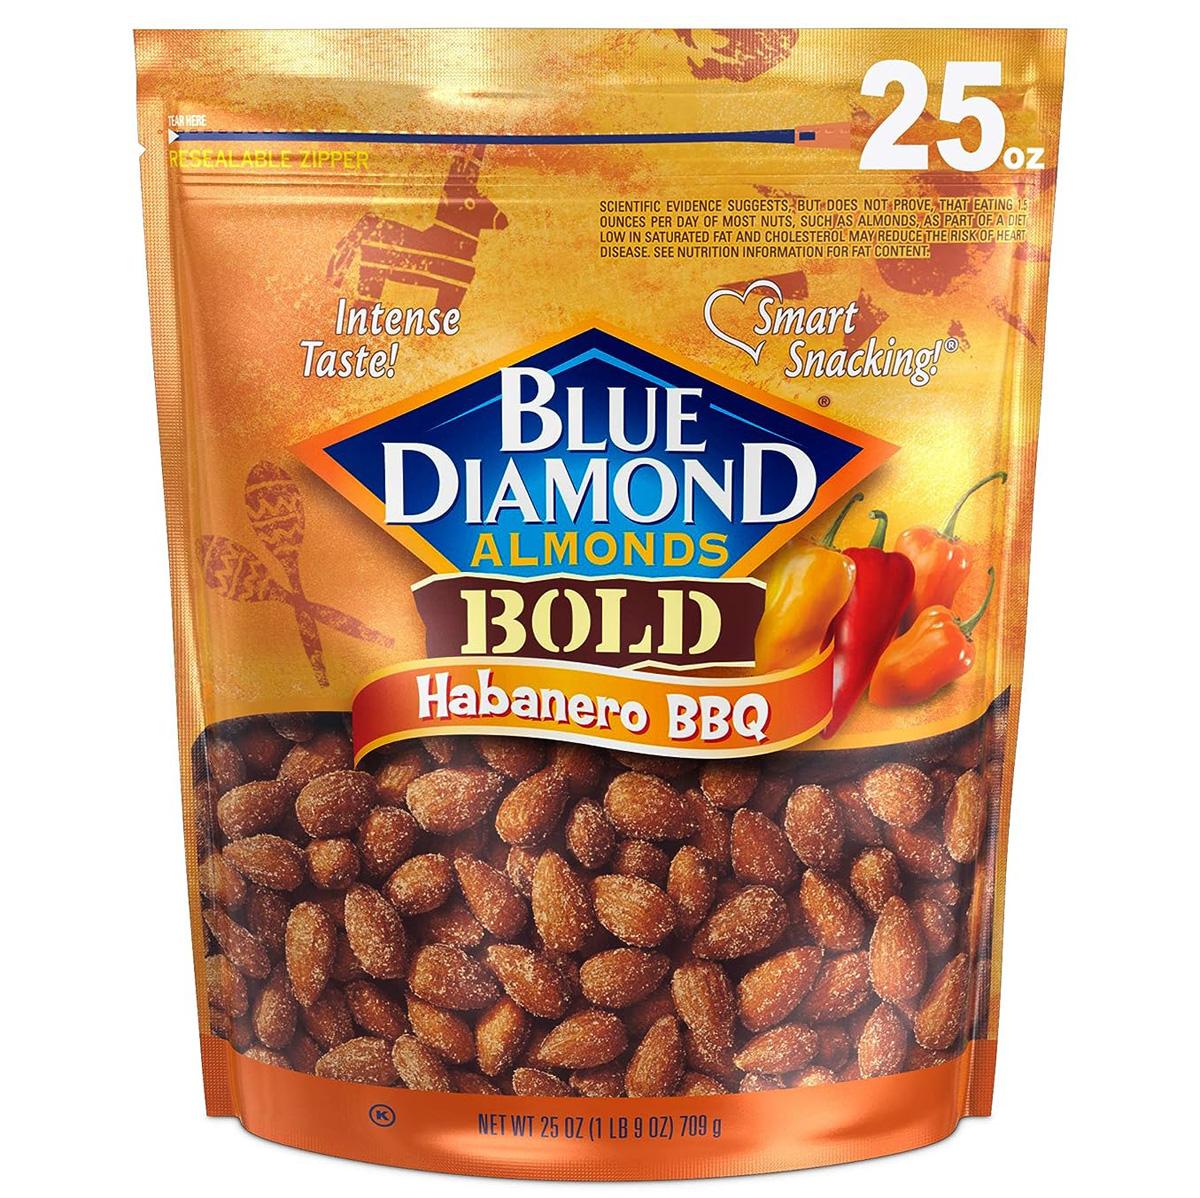 Blue Diamond Almonds Habanero BBQ for $5.90